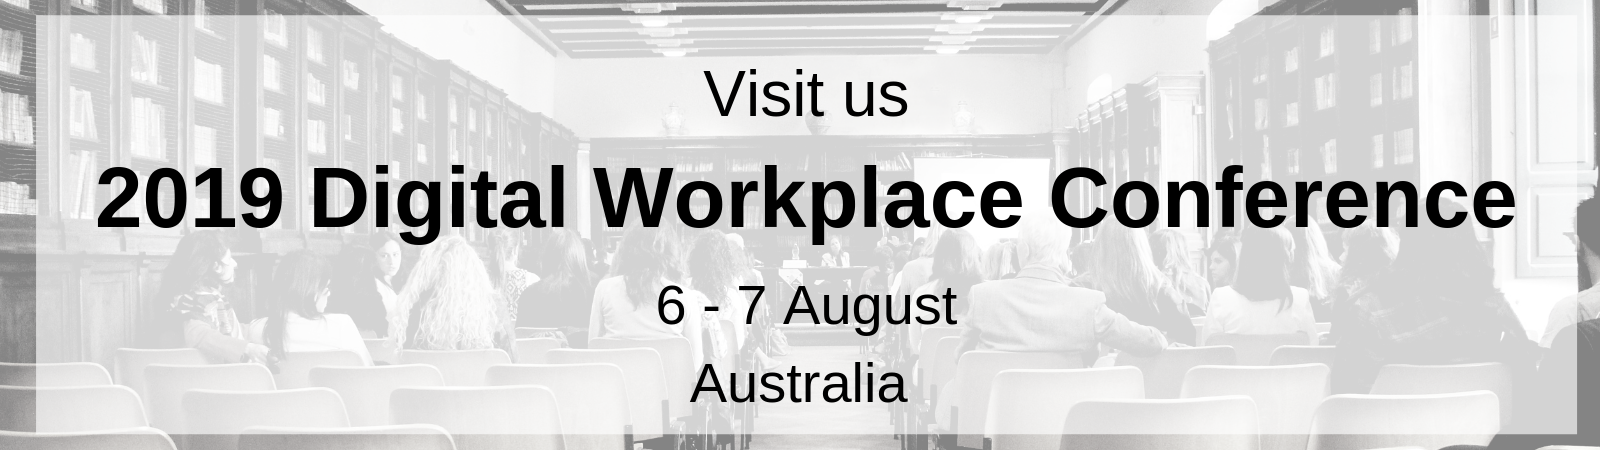 2019 Digital Workplace Conference: Australia